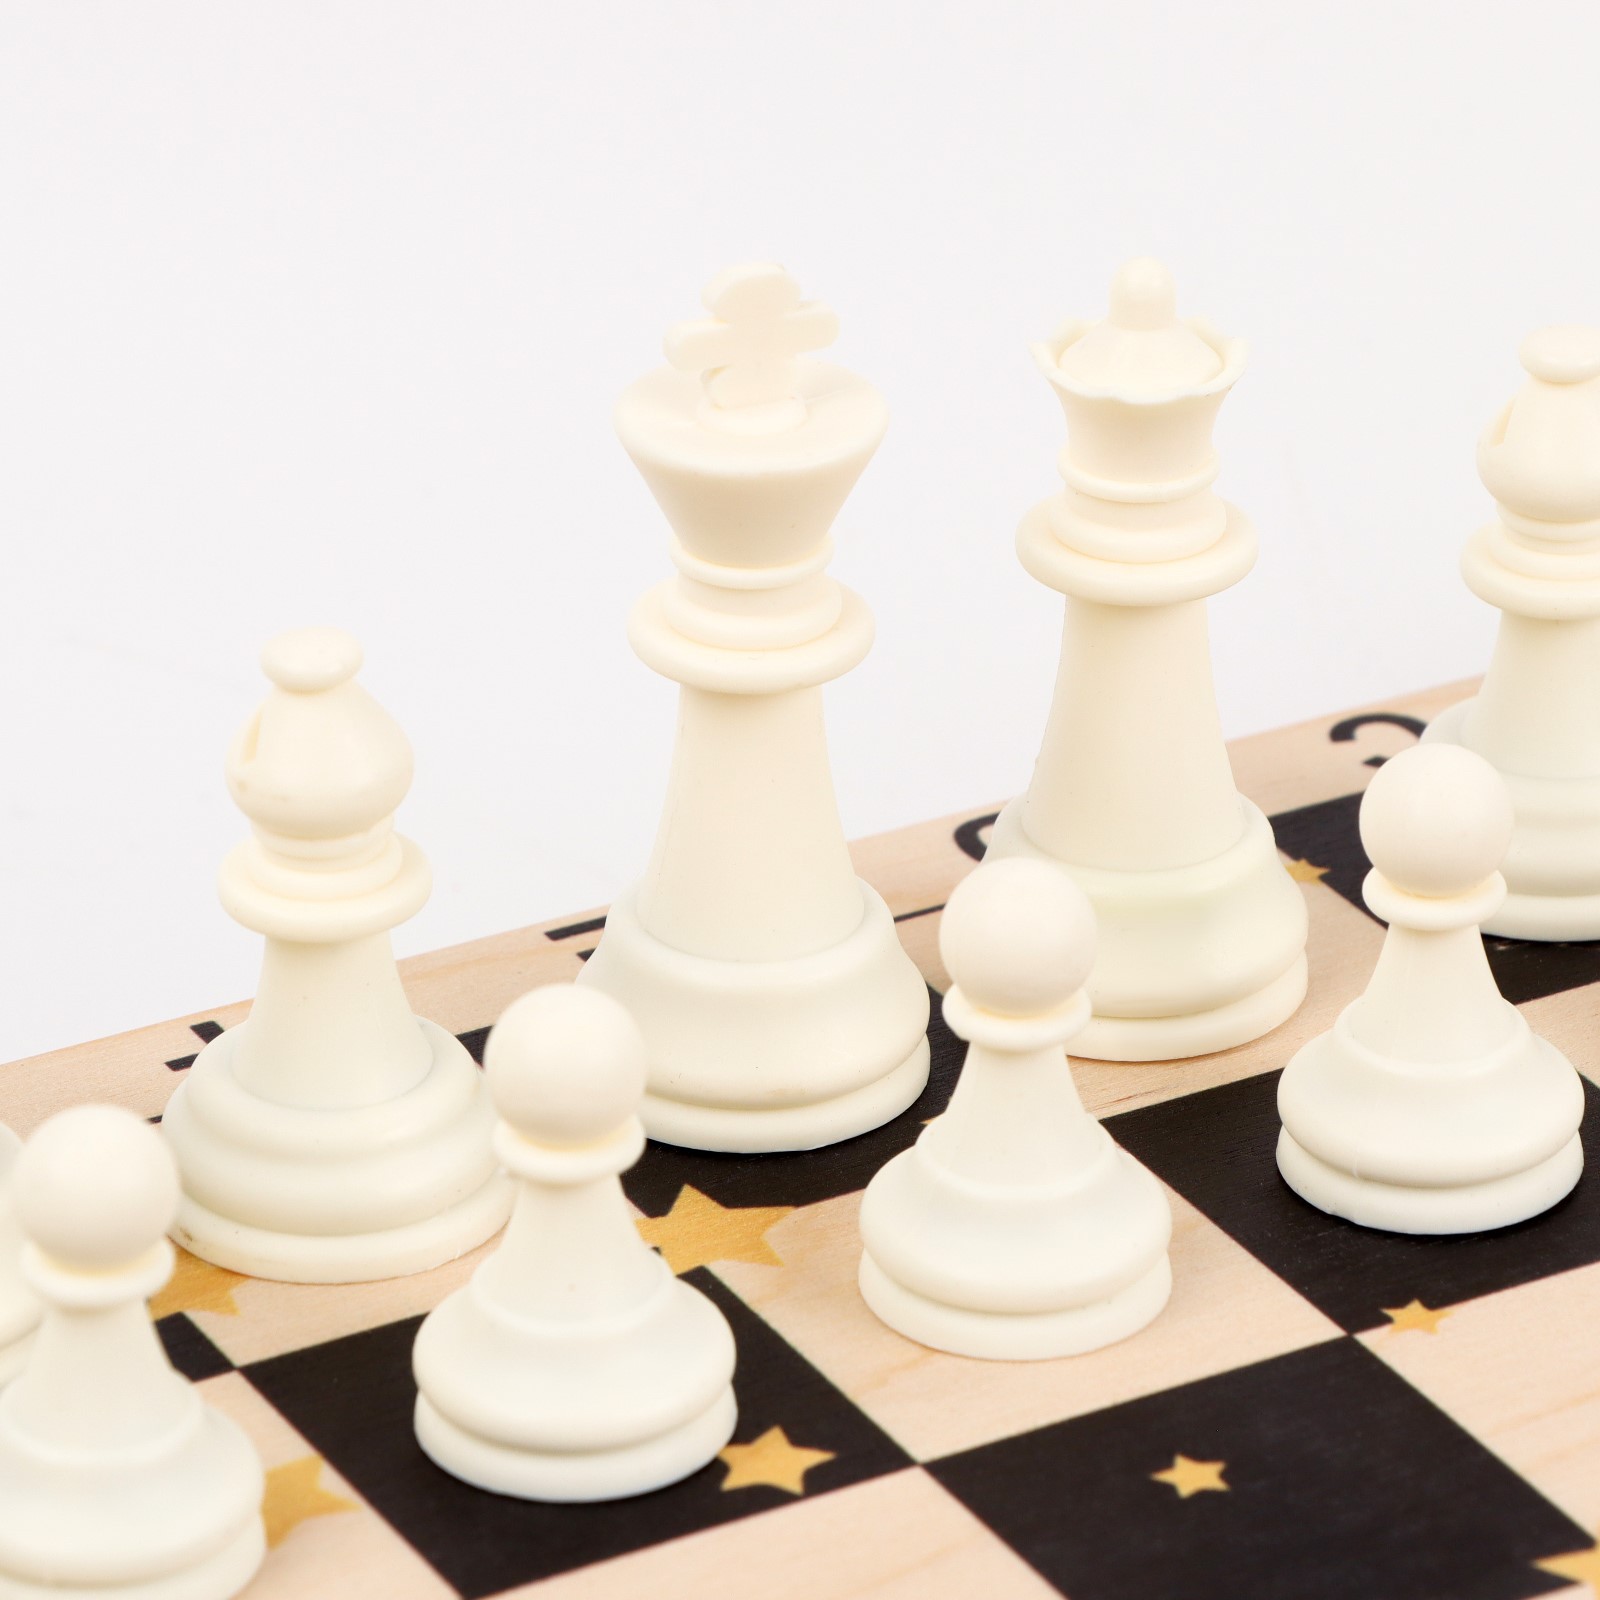 Шахматы Sima-Land обиходные «Панды» король h 6.2 см пешка h 3.2 см доска 29х29 см - фото 5